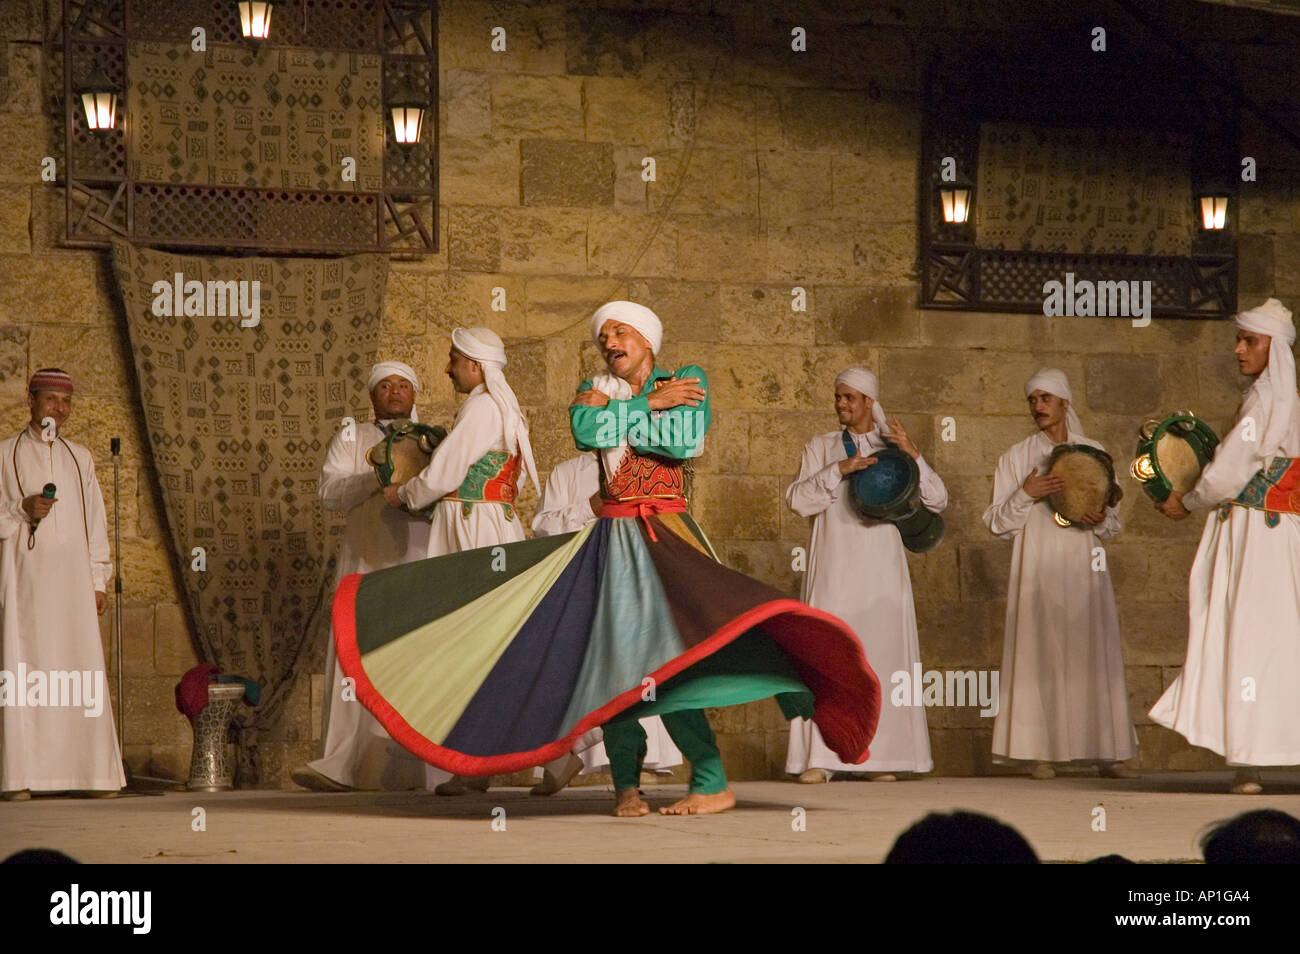 Sufi Dance Troup Citadel Cairo Egypt Middle East DSC 3995 Stock Photo